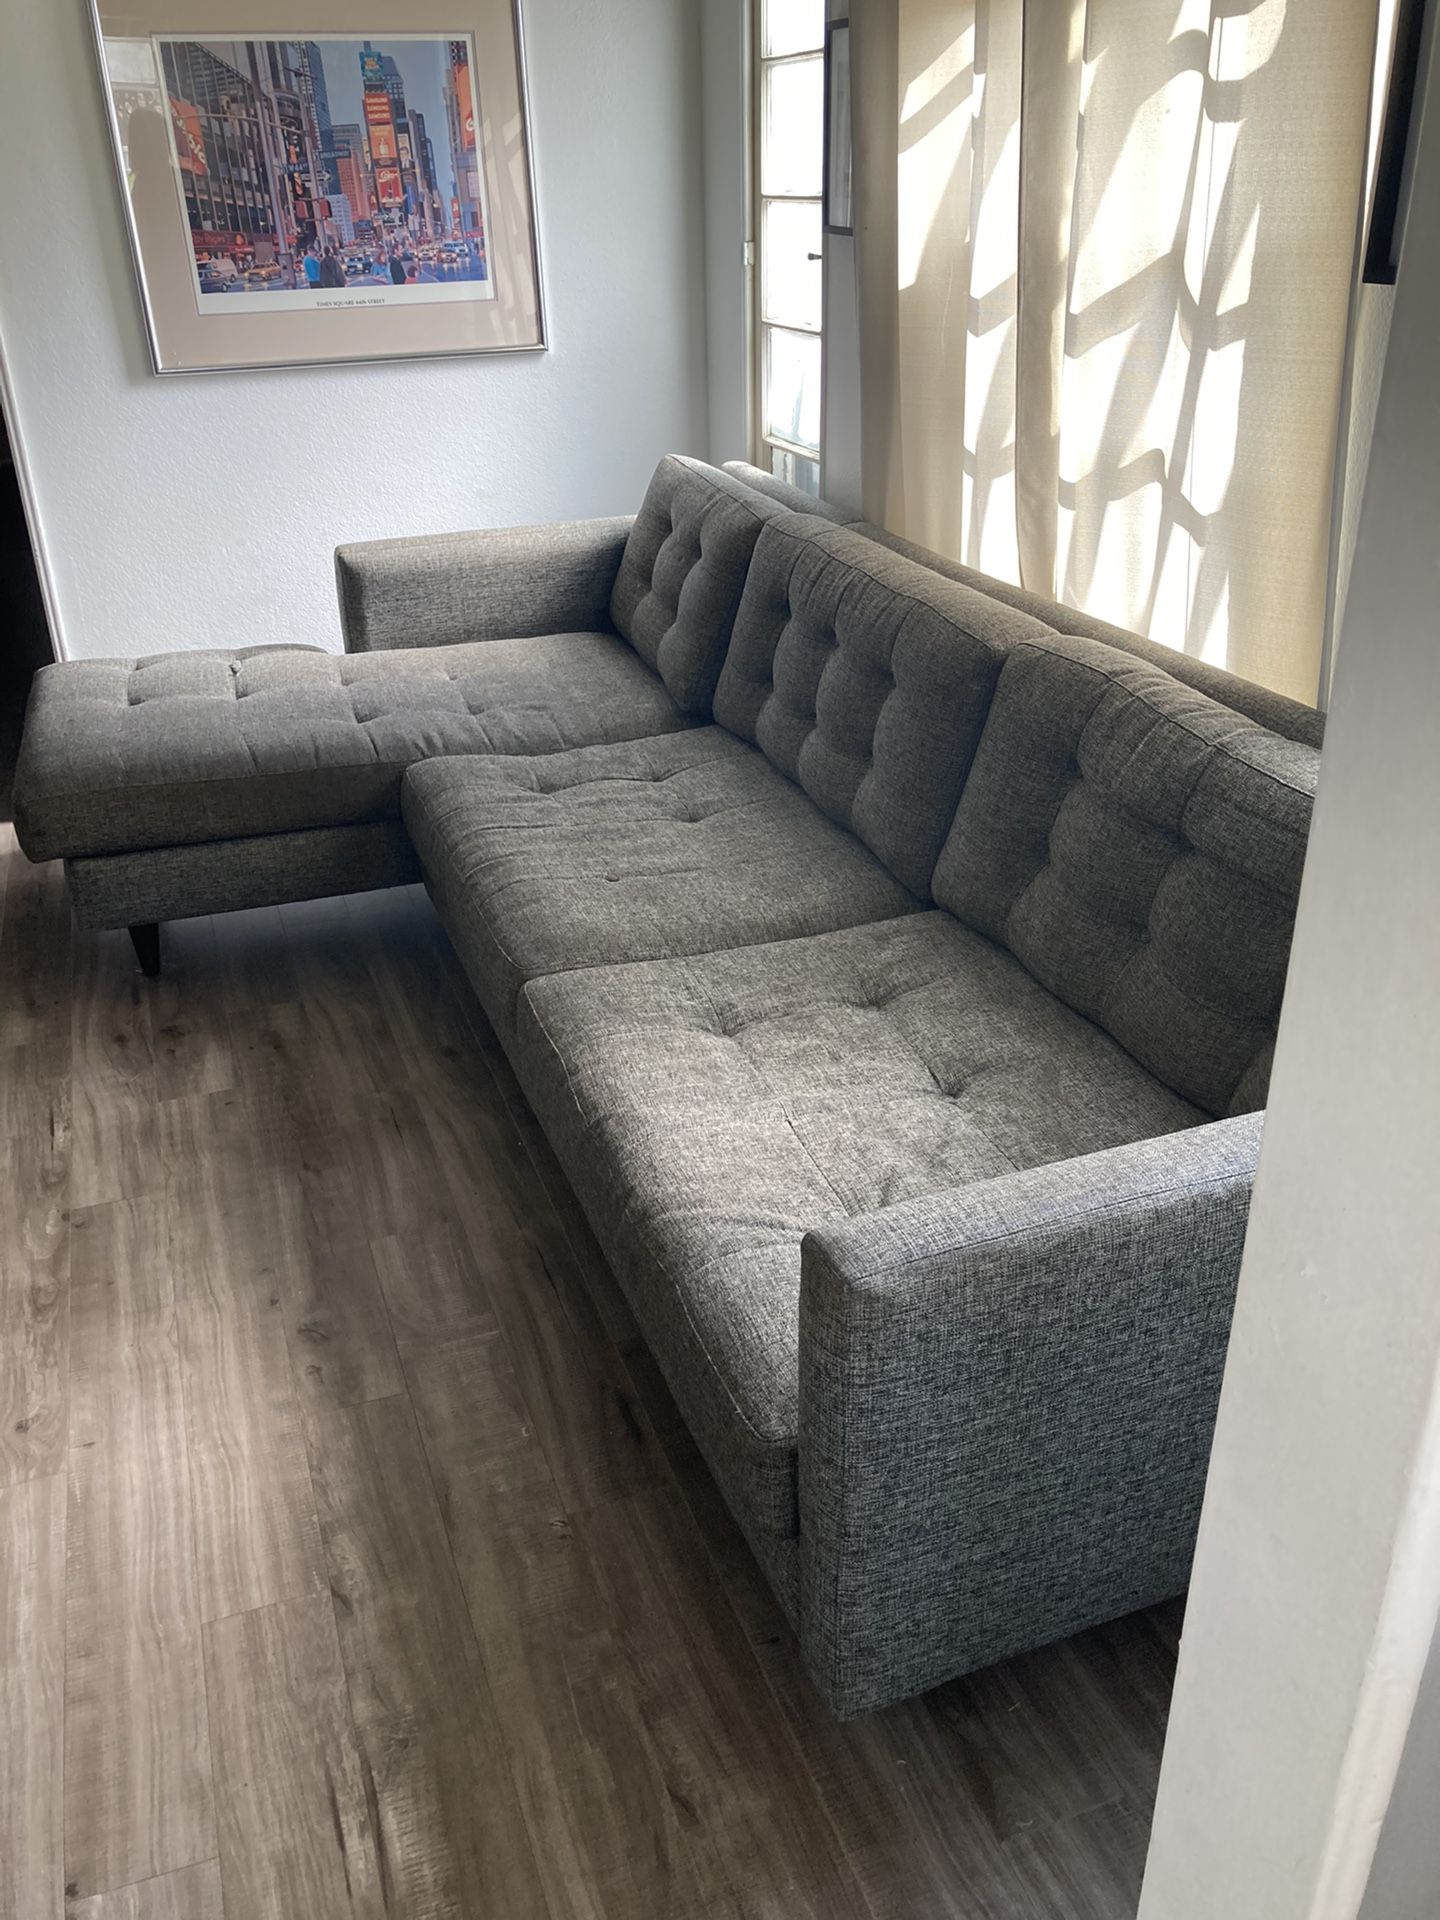 Custom made sectional sofa